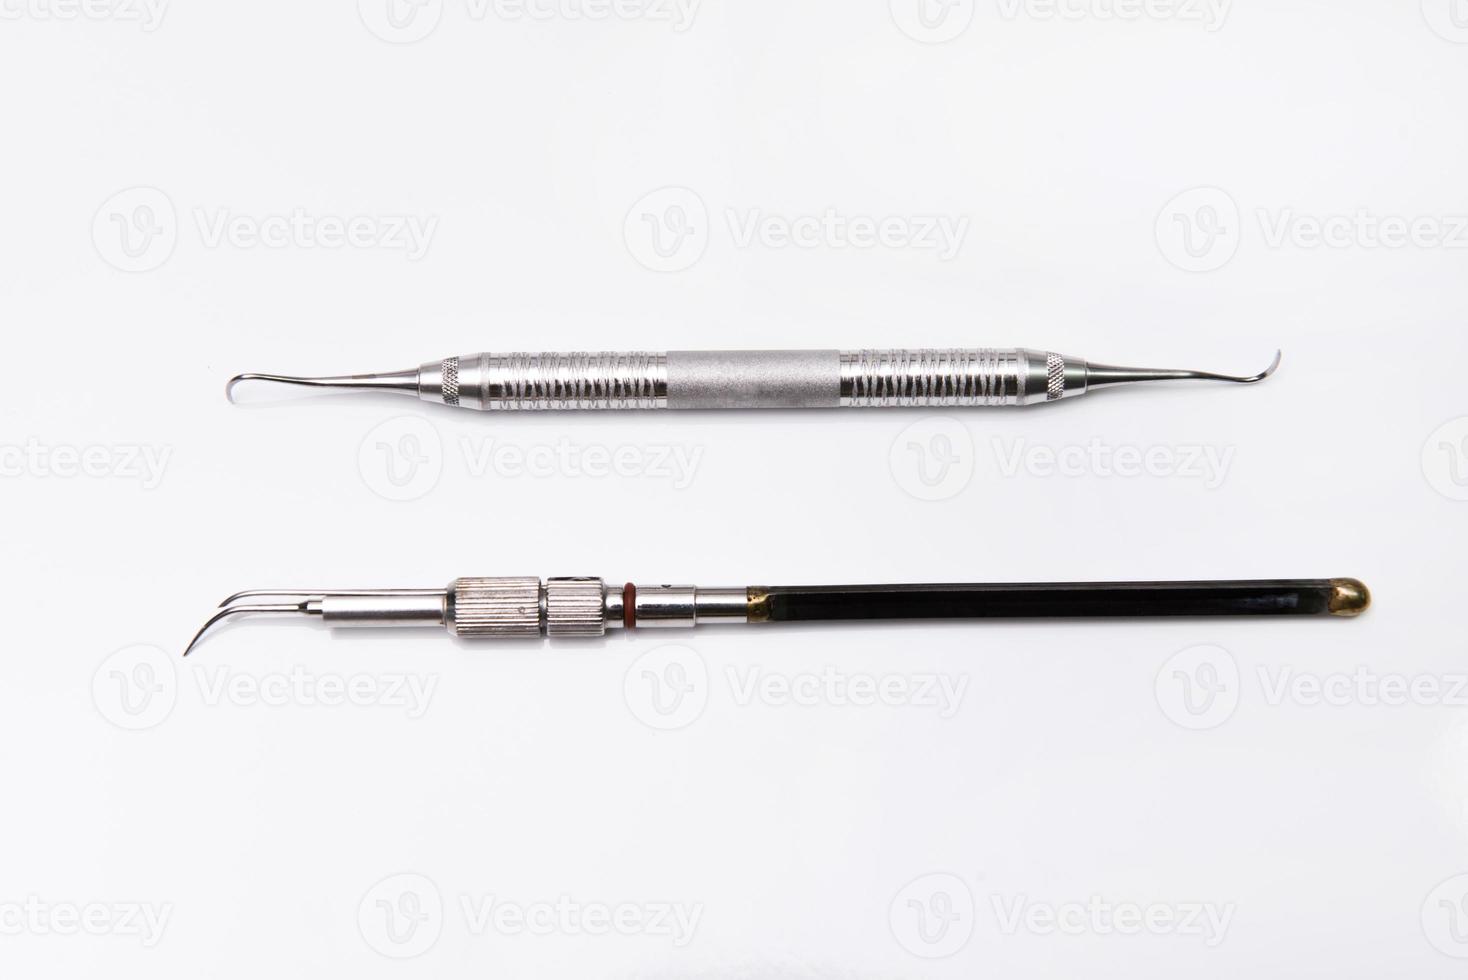 Dental tools in dental clinic photo